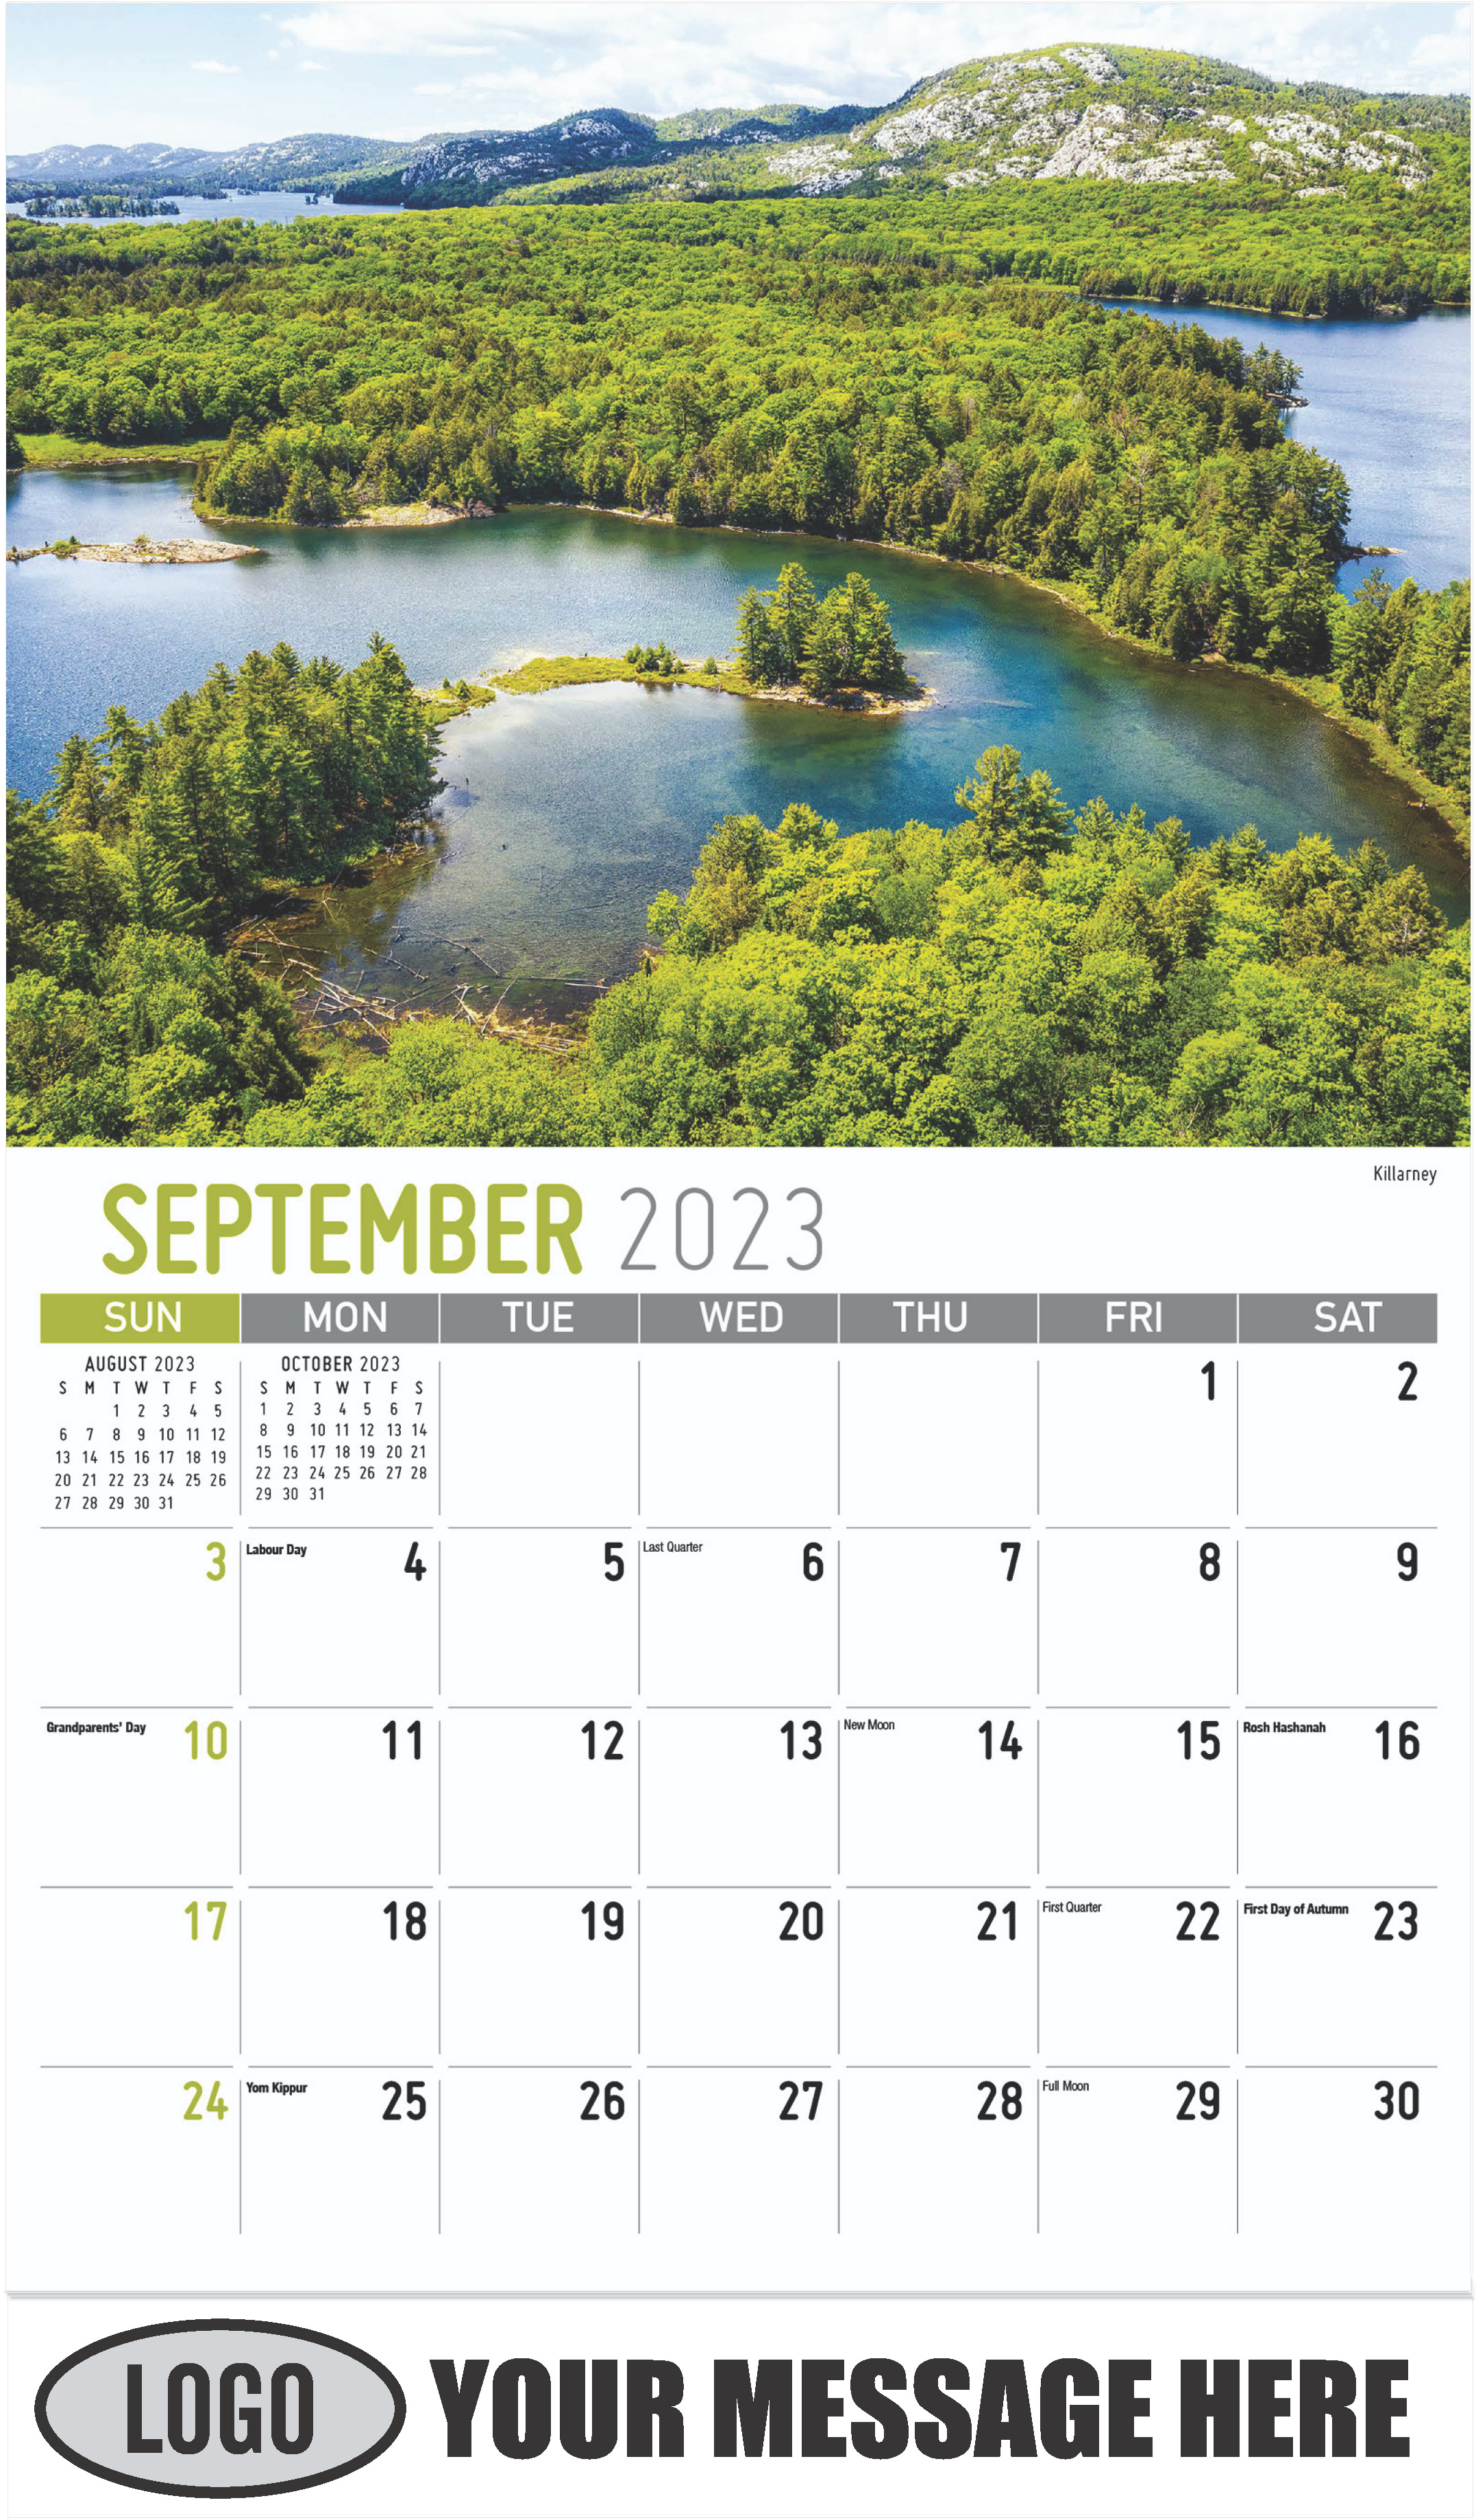 Killarney - September - Scenes of Ontario 2023 Promotional Calendar